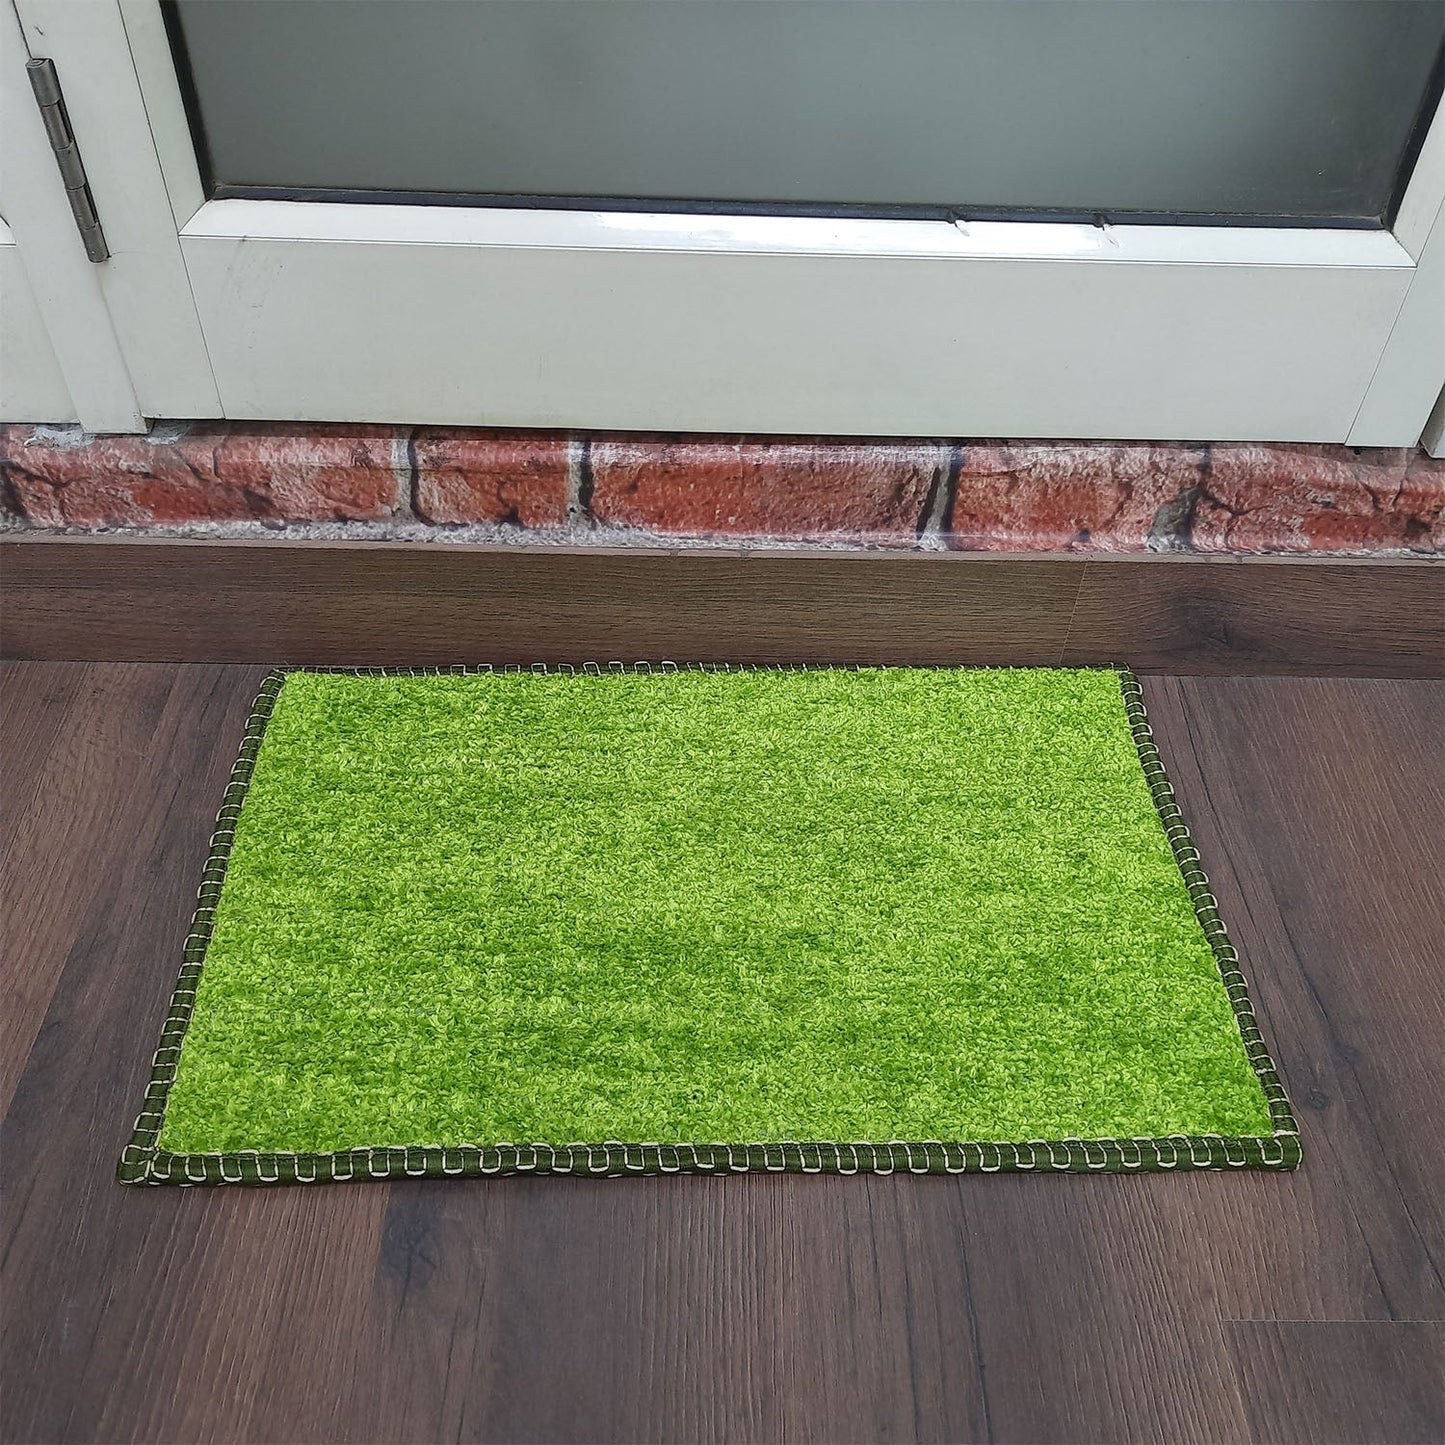 SET OF FOUR | Avioni SlipToGrip Universal Doormat | Green, Size 35cm x 55cm | Anti Slip, Durable & Washable | Outdoor & Indoor